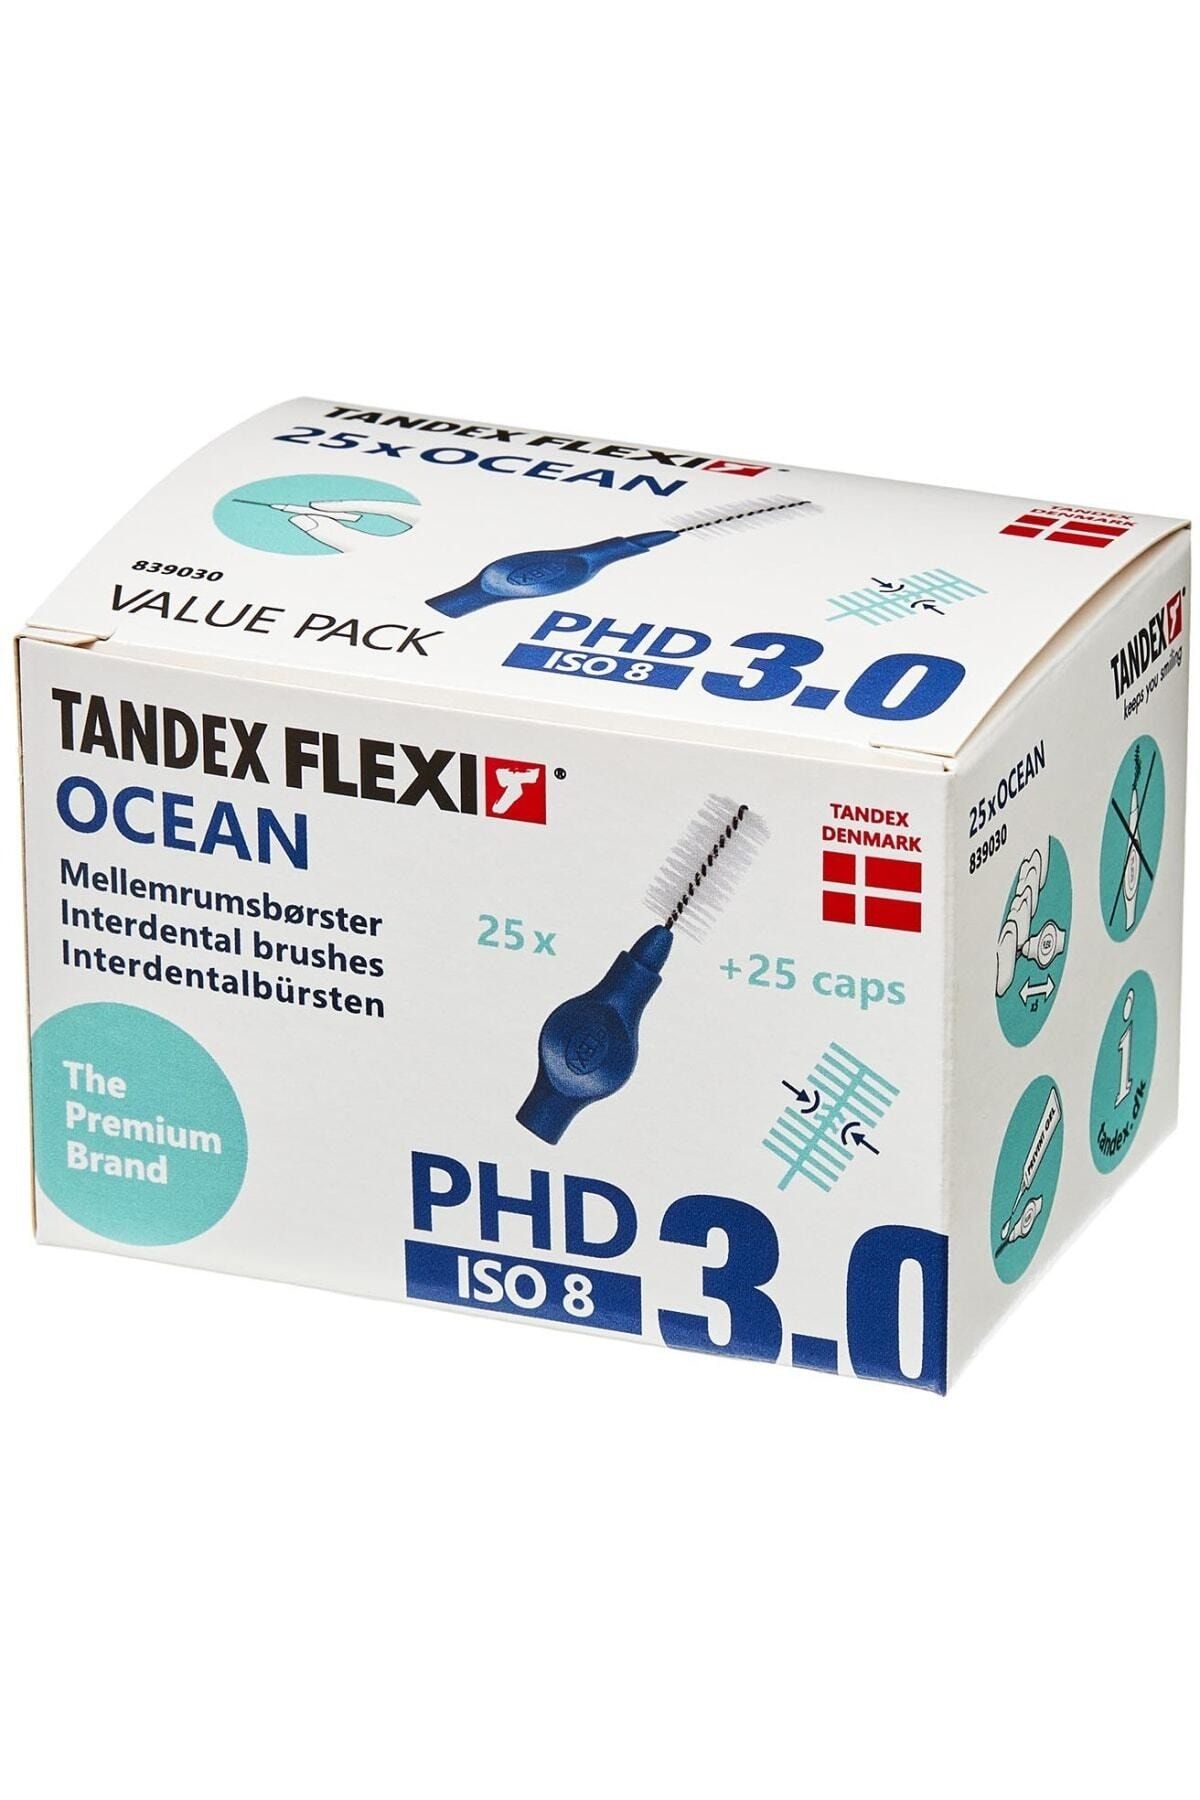 TANDEX Flexi 25Li Arayüz Fırçası 1.2mm Phd 3.0 - Ocean